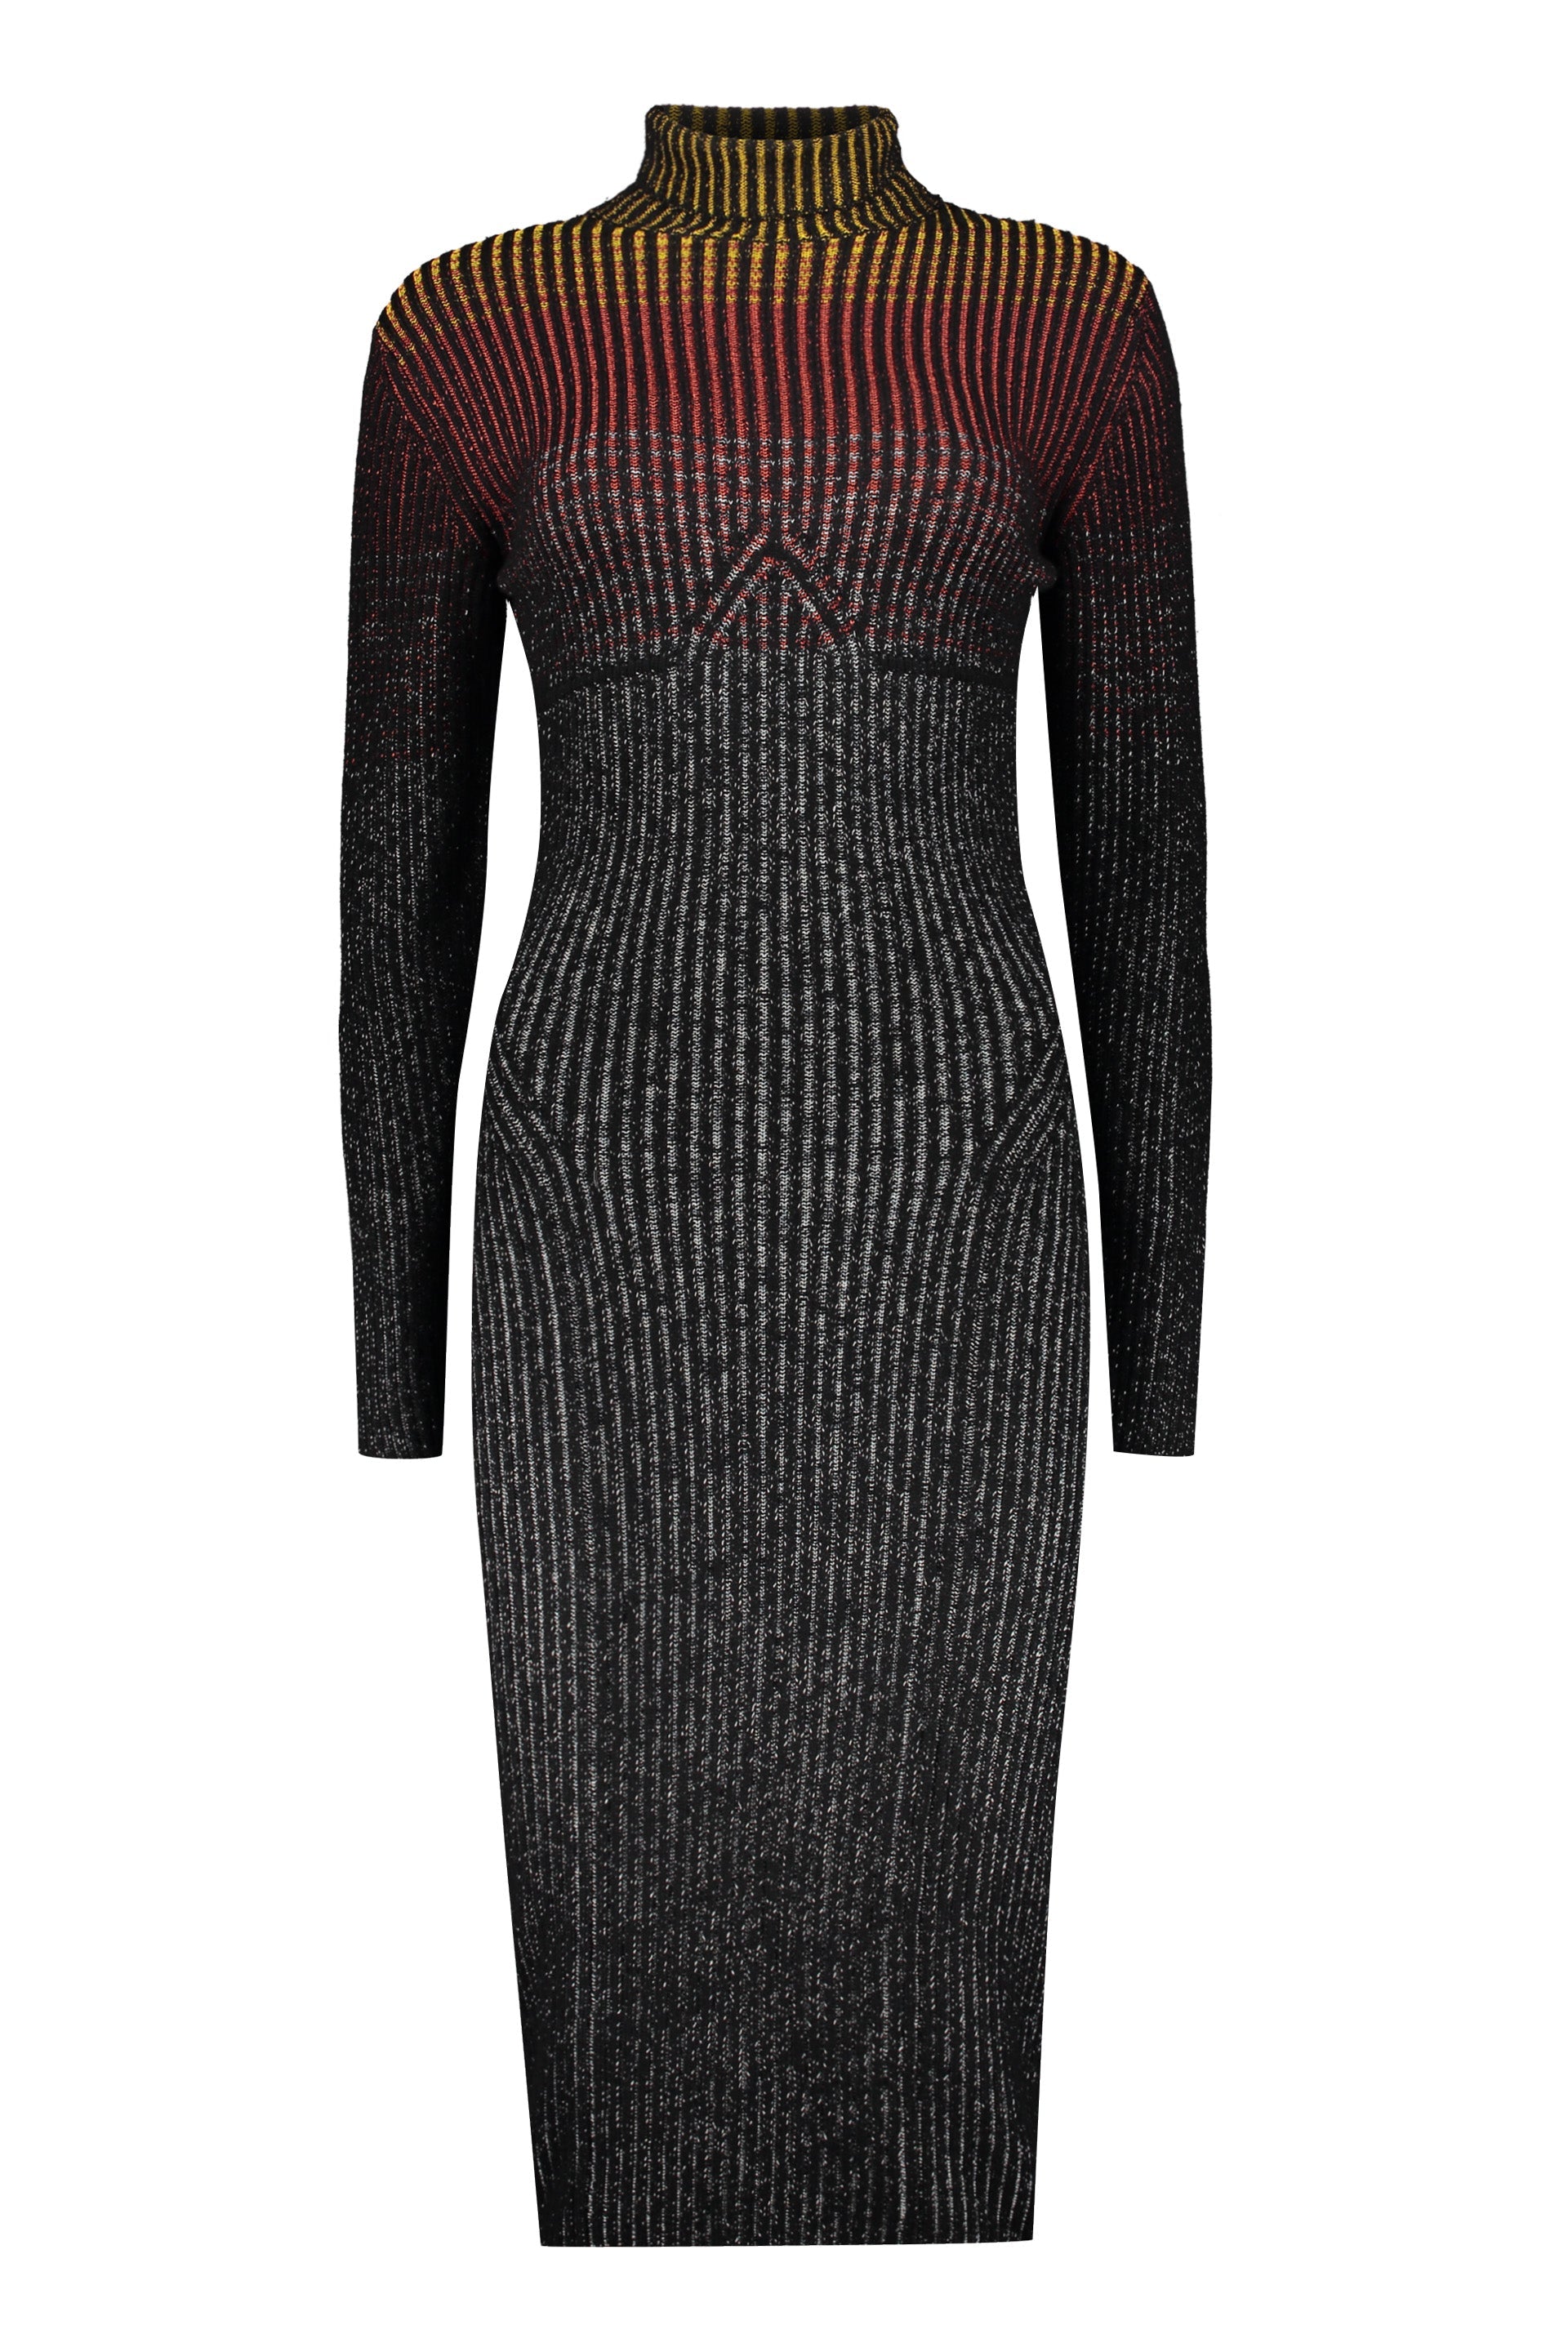 Missoni-OUTLET-SALE-Ribbed-knit-dress-Kleider-Rocke-40-ARCHIVE-COLLECTION.jpg